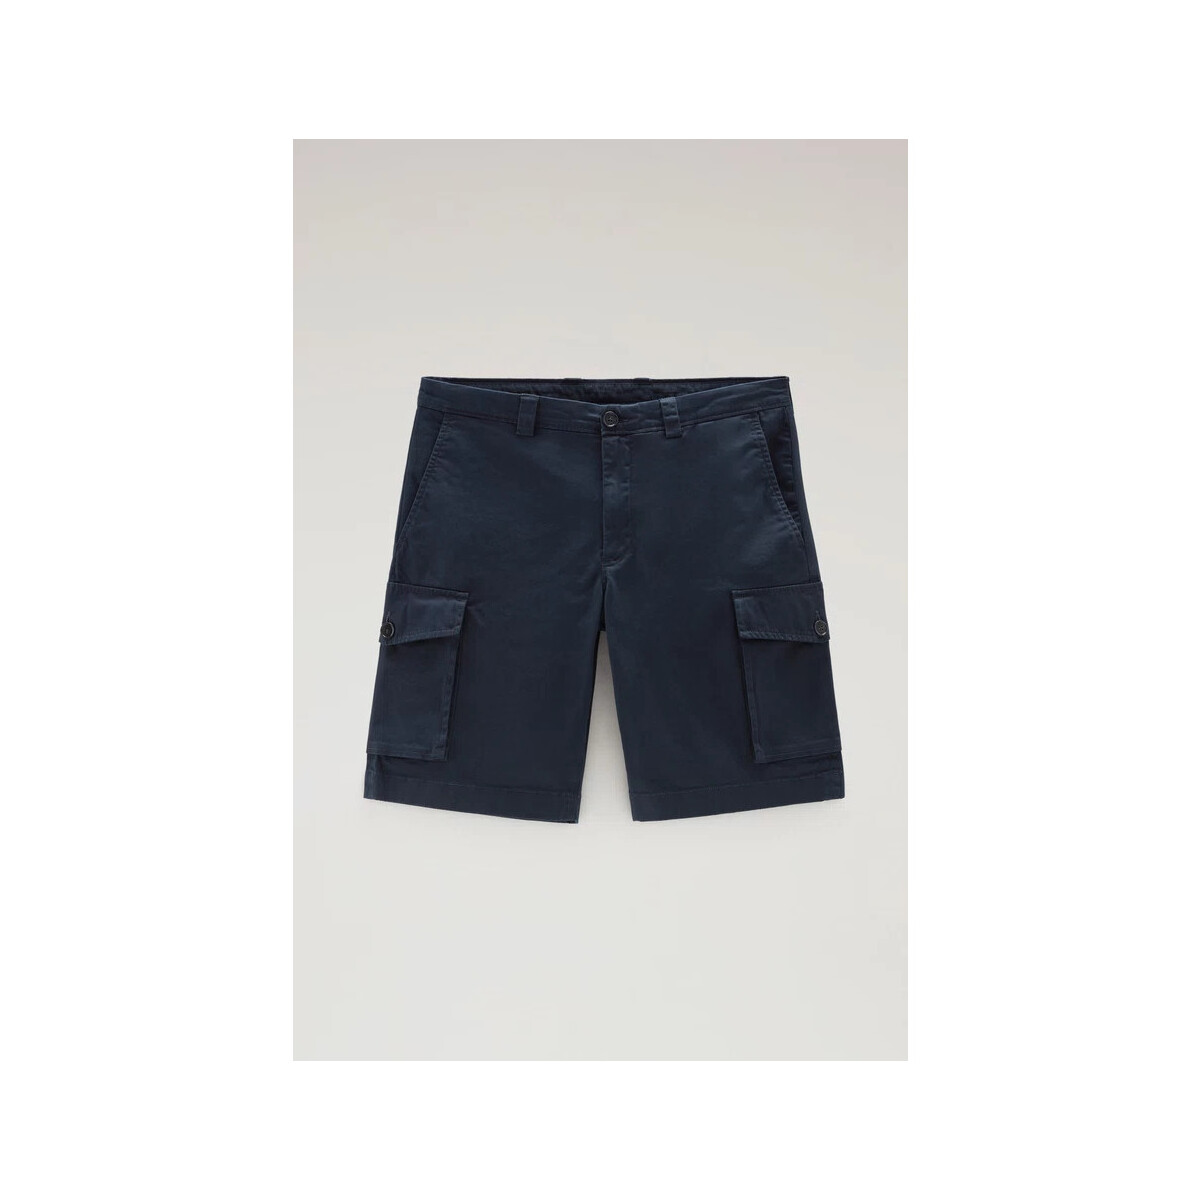 Textil Homem Shorts / Bermudas Woolrich WOSH0039MR Azul